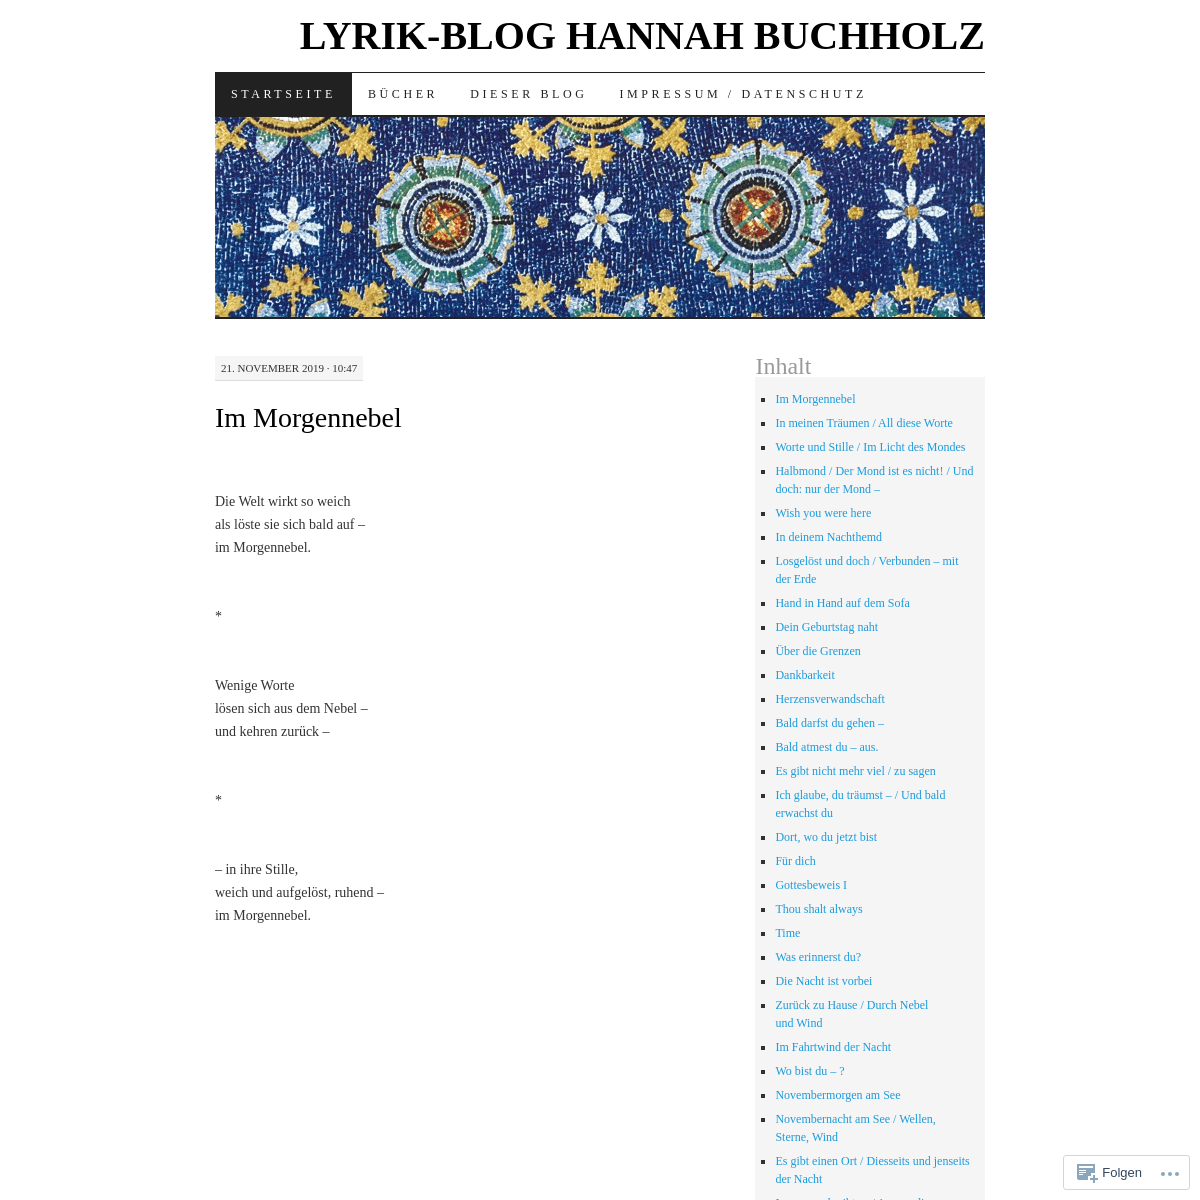 A complete backup of hannahbuchholz.wordpress.com